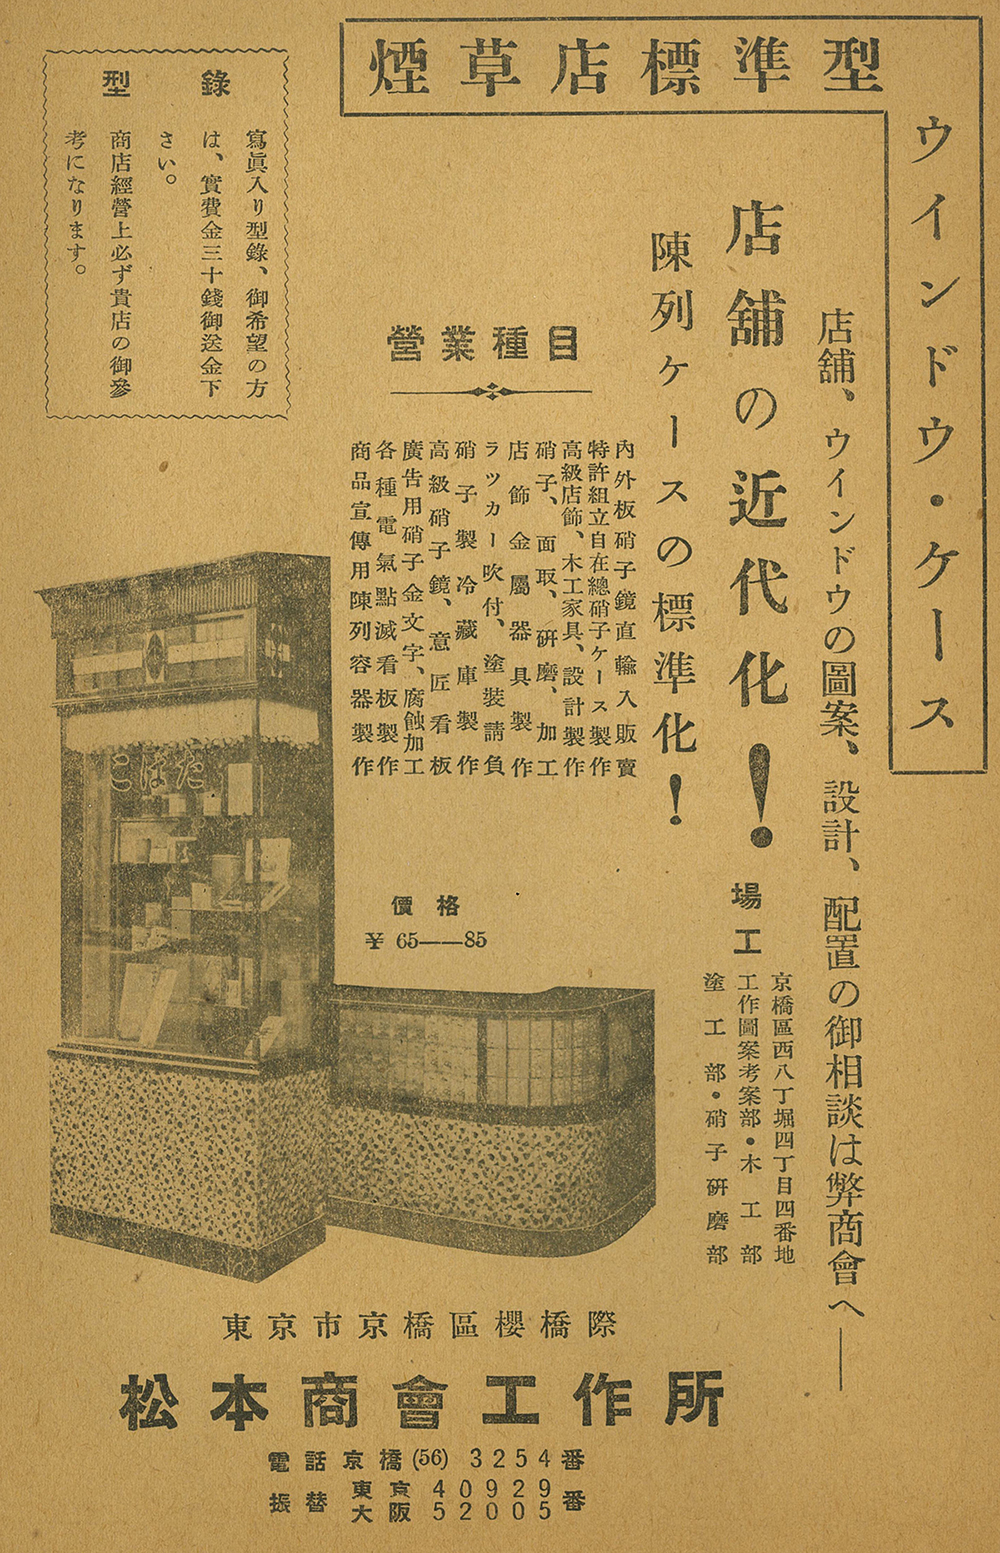 広告「煙草店標準型ウインドウ・ケース」　『莨』（1934年6月号） 暁山閣出版部